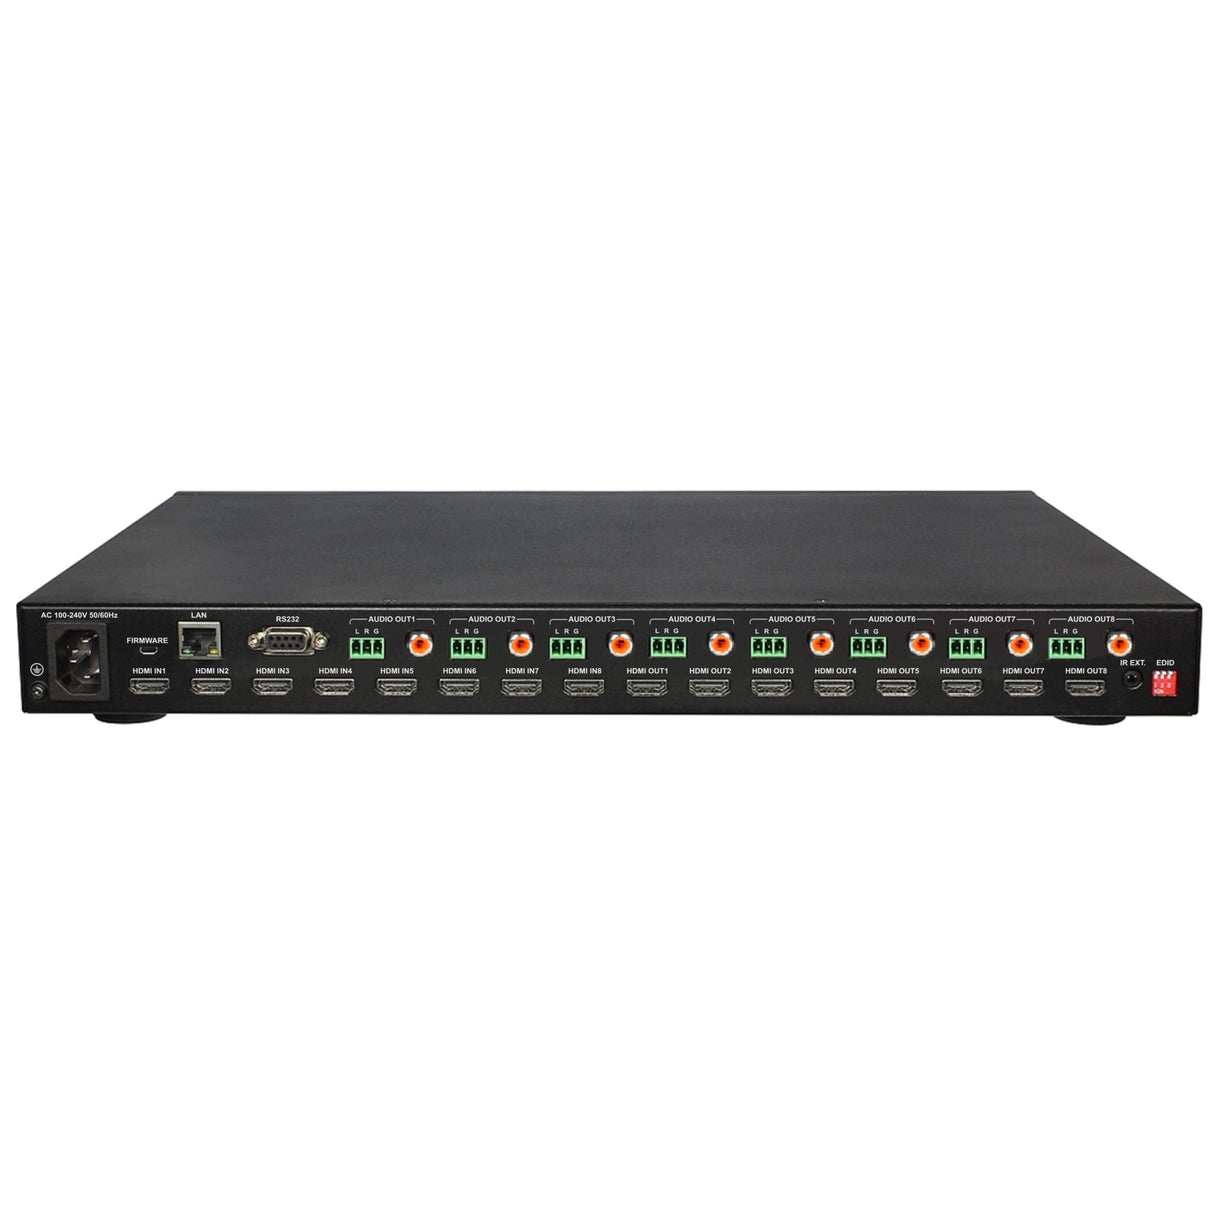 DigitaLinx DL-HDM88A-H2 4K60 8 x 8 HDMI 2.0 Matrix Switcher